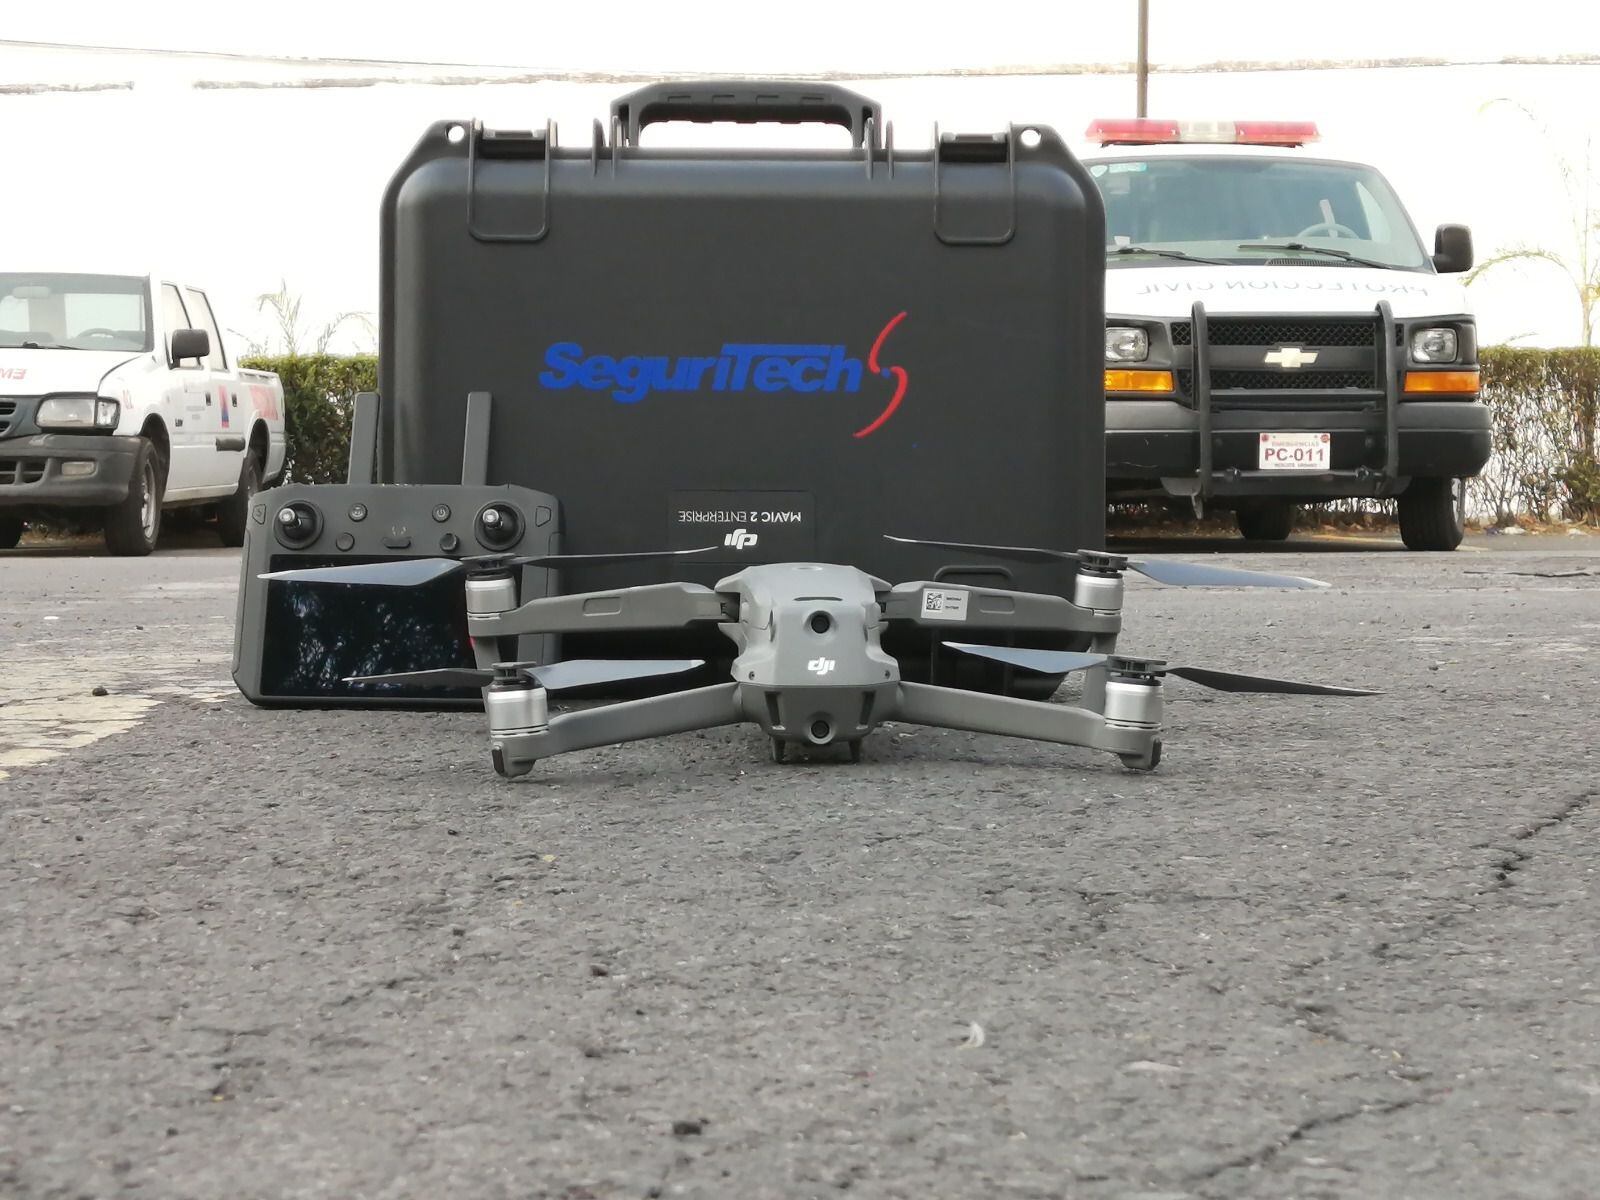 Seguritech emplea drones